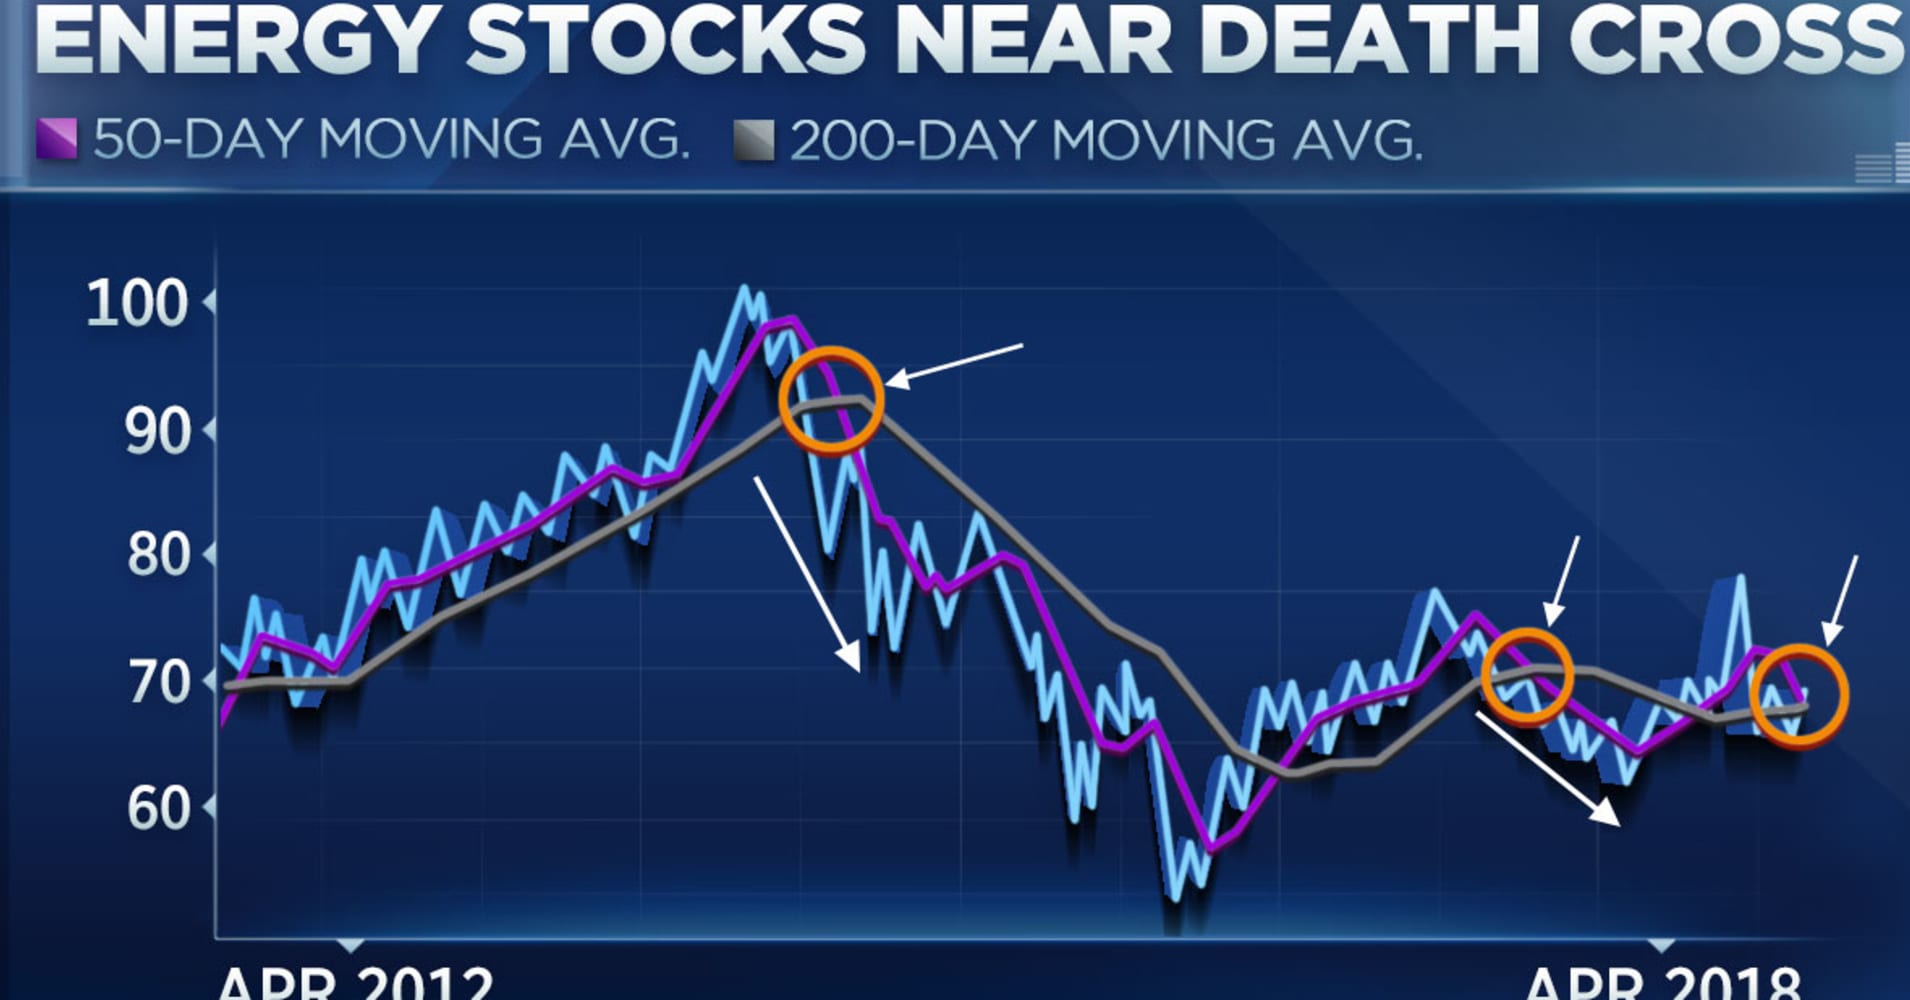 Se Stock Chart